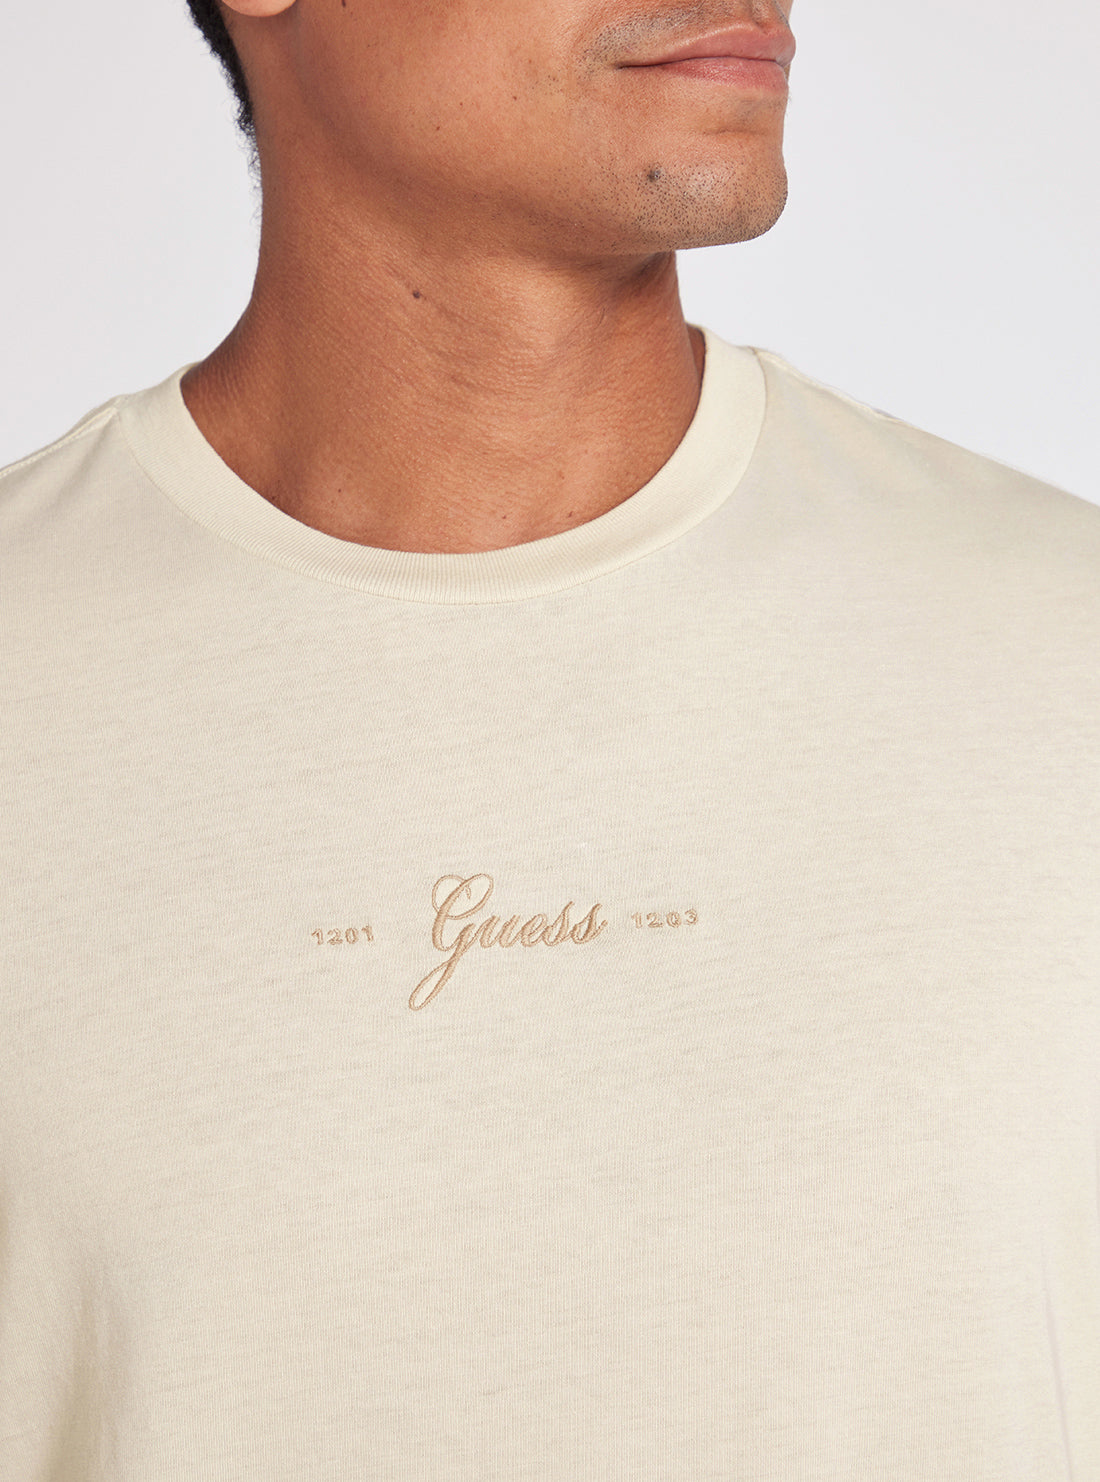 Cream Stacked 1981 Logo T-Shirt | GUESS Men's Apparel | detail view alt